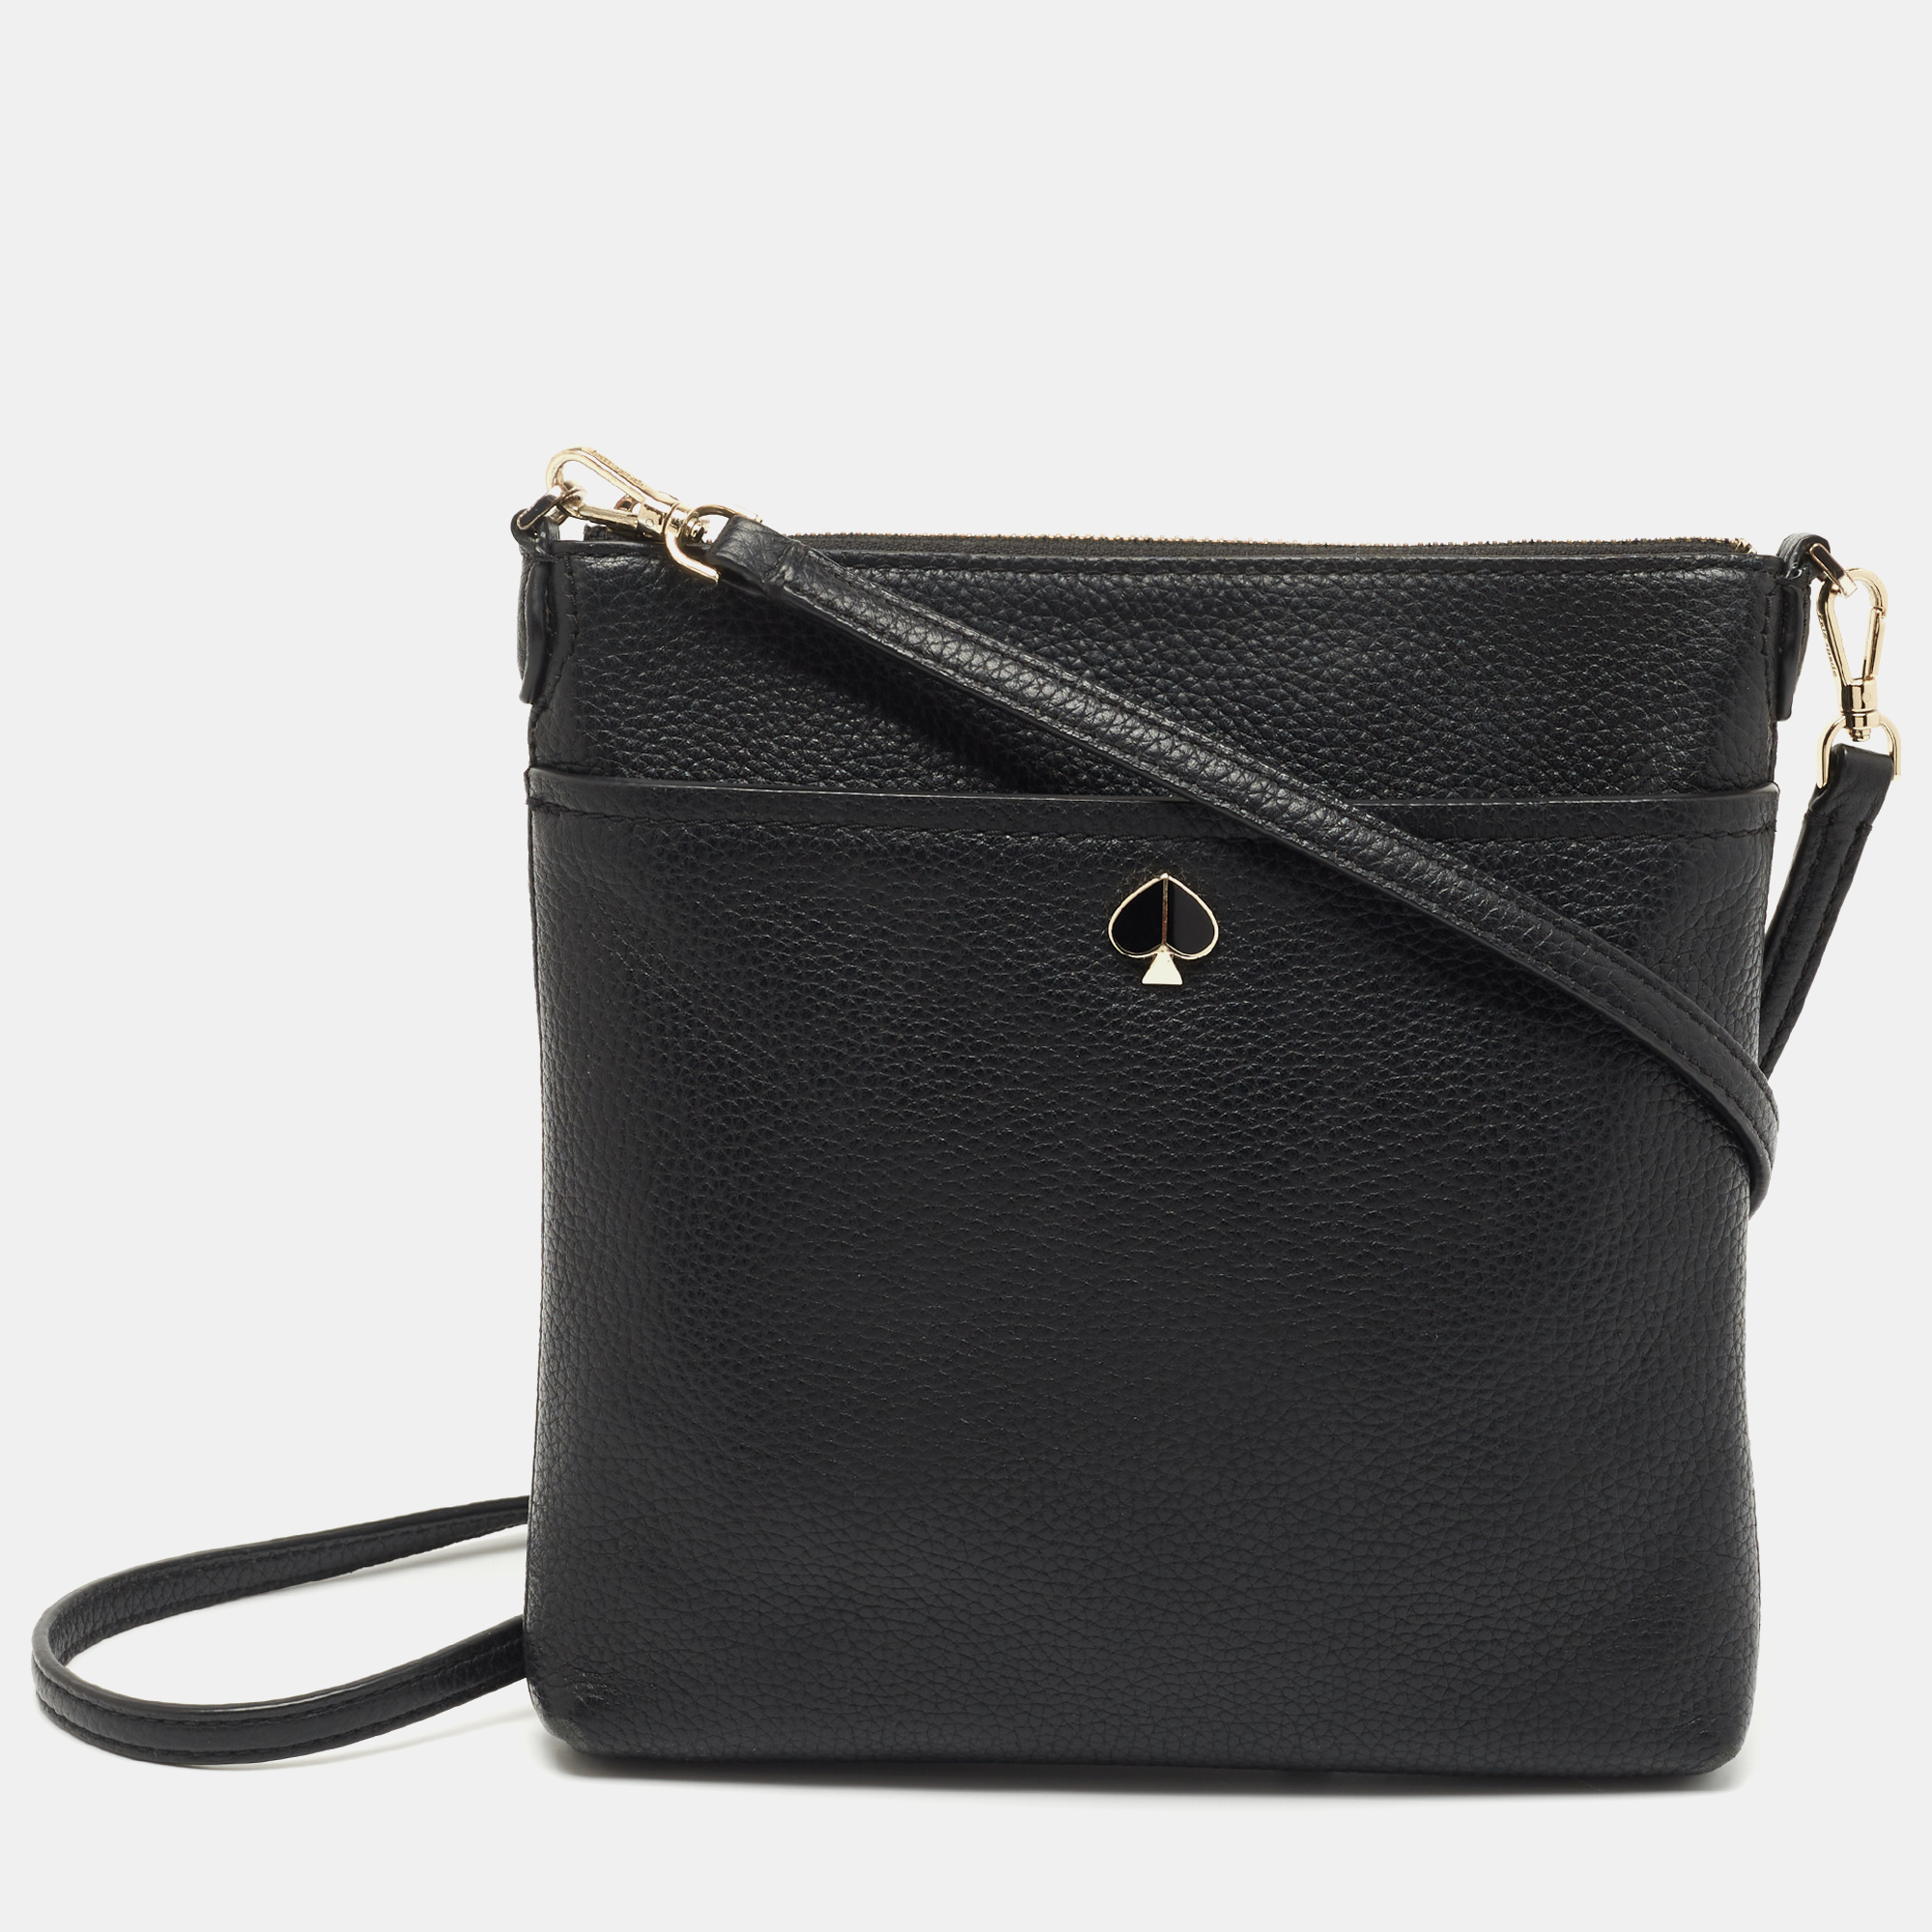 Pre-owned Kate Spade Black Leather Zip Crossbody Bag